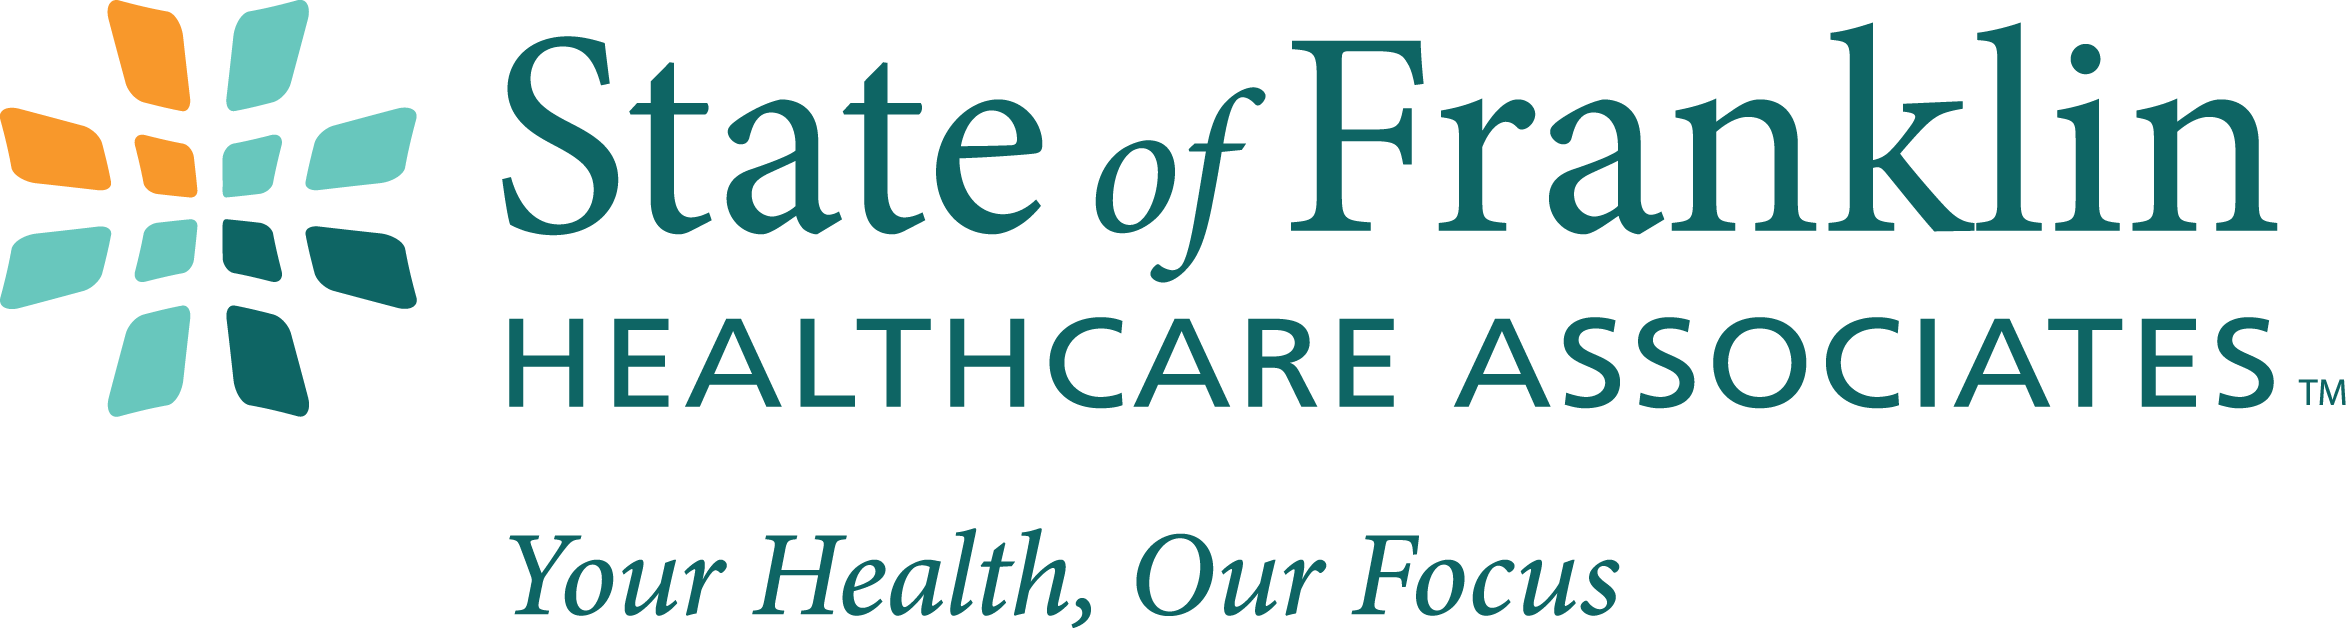 State of Franklin Healthcare Associates logo